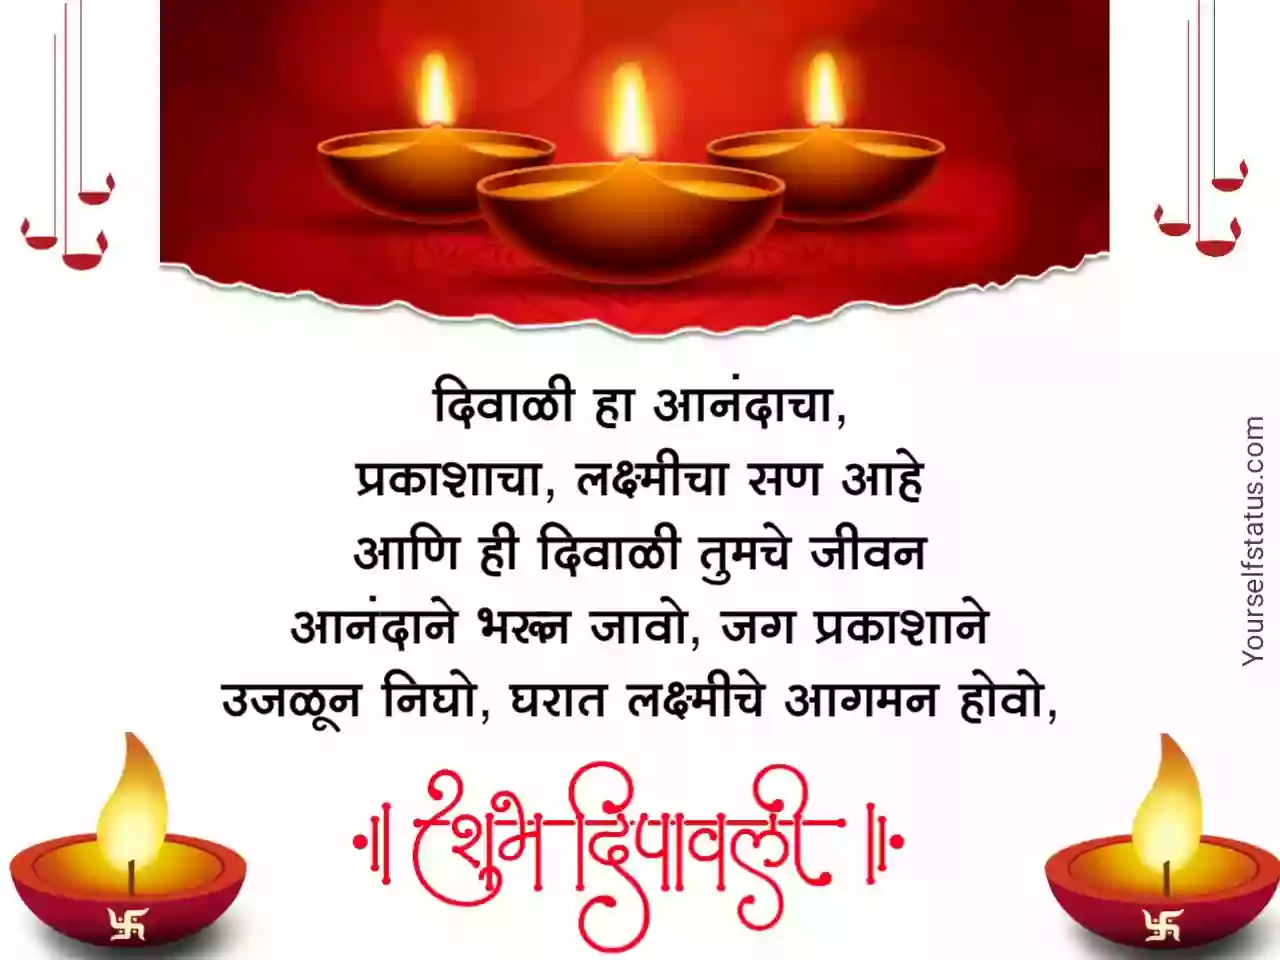 Happy Diwali images in marathi